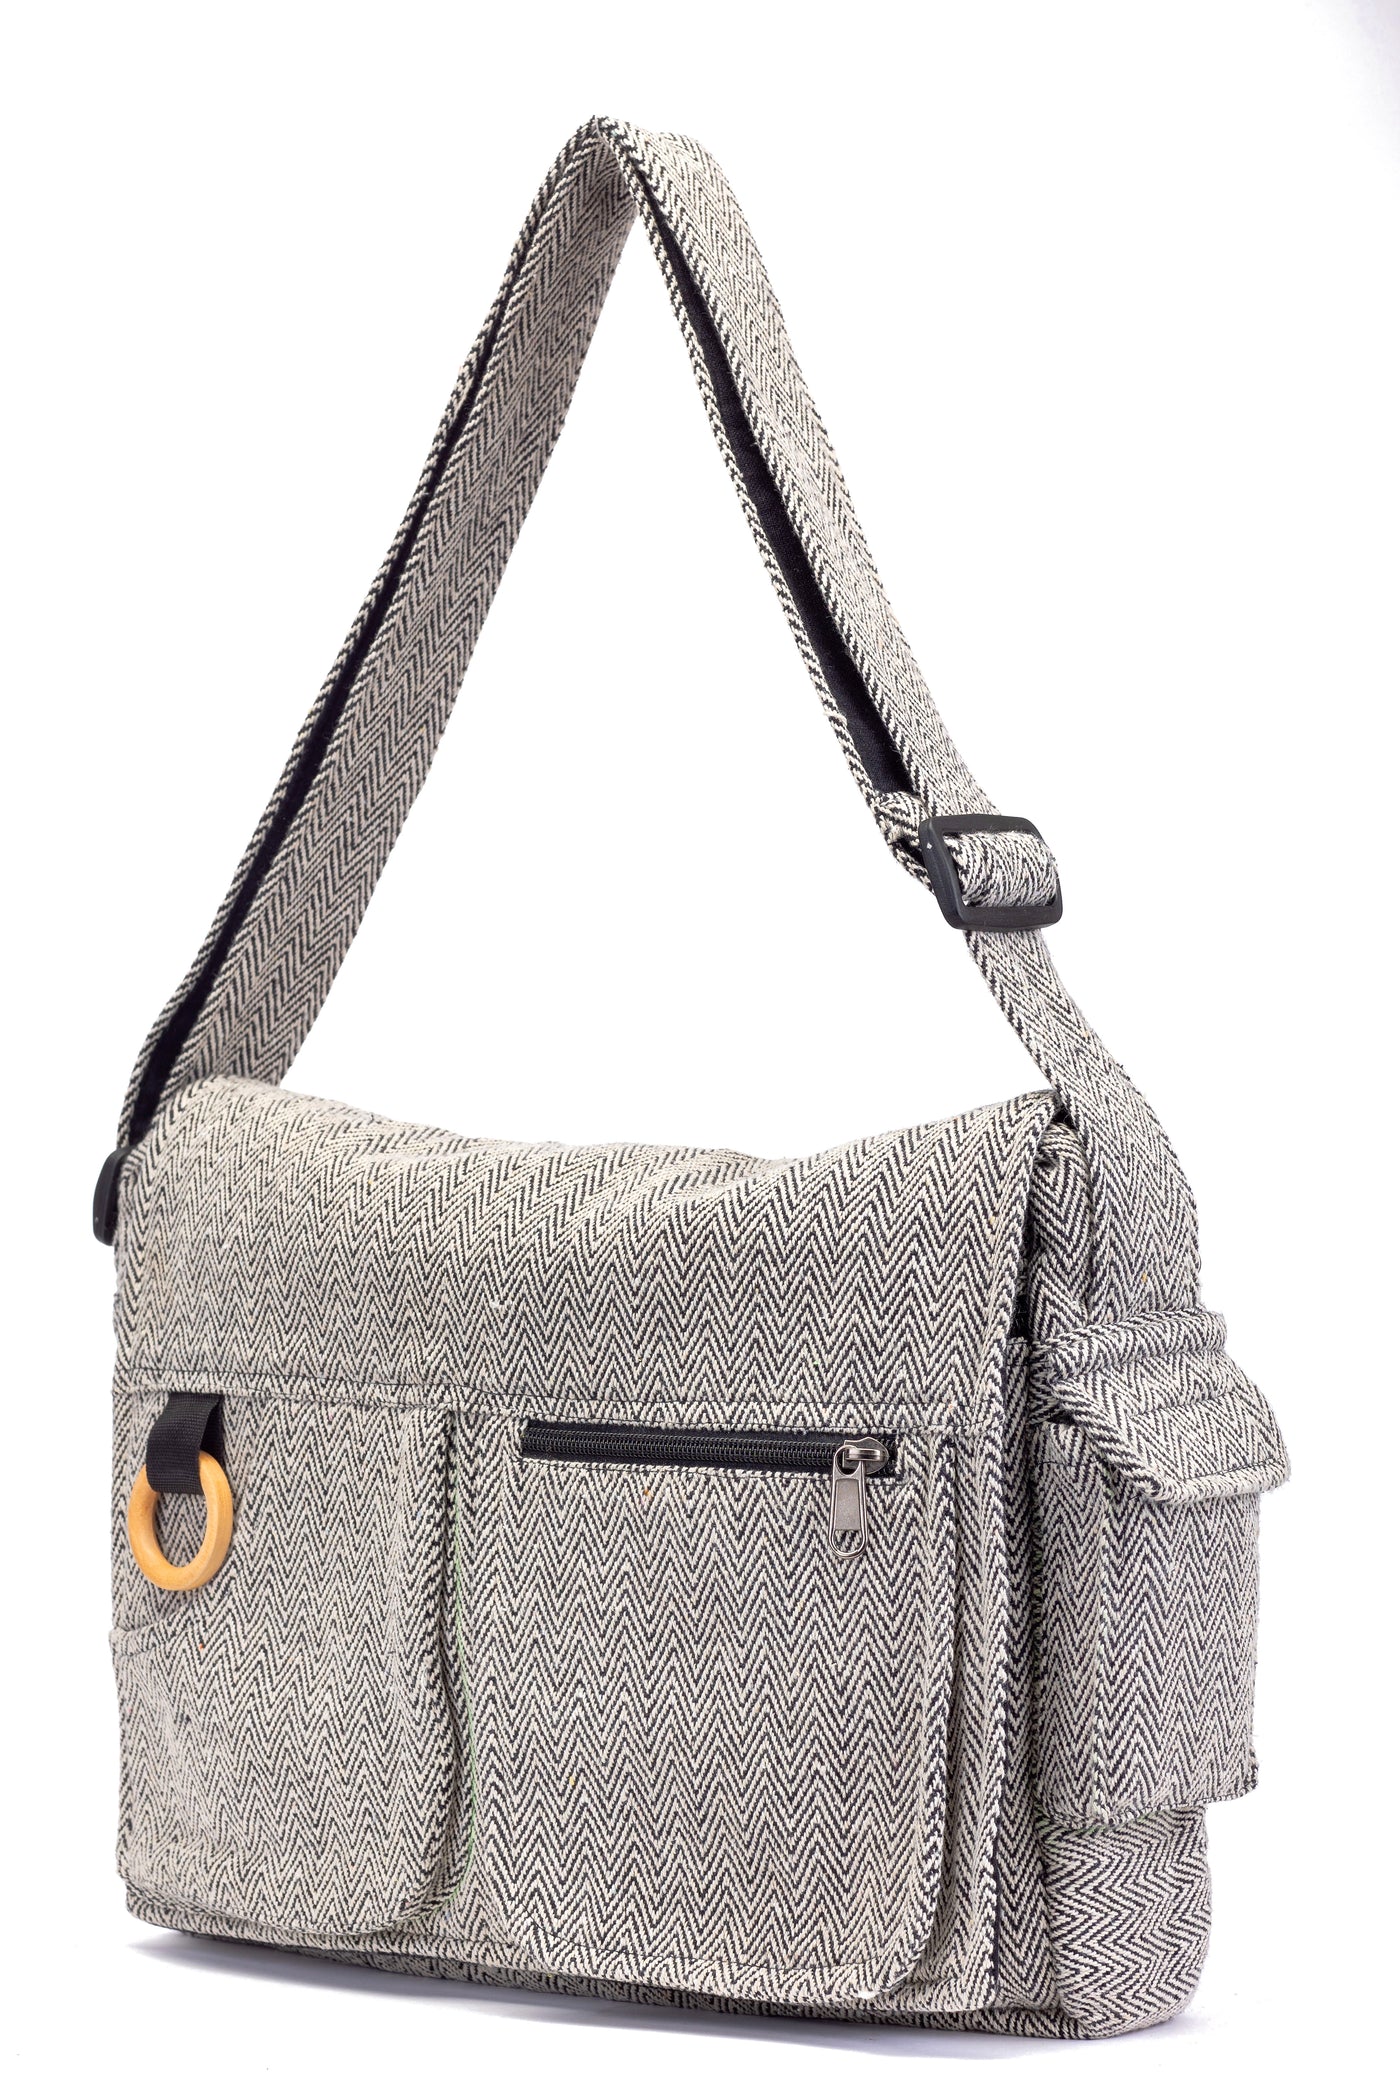 handmade cotton messenge laptop bag grey and black fishbone pattern fabric